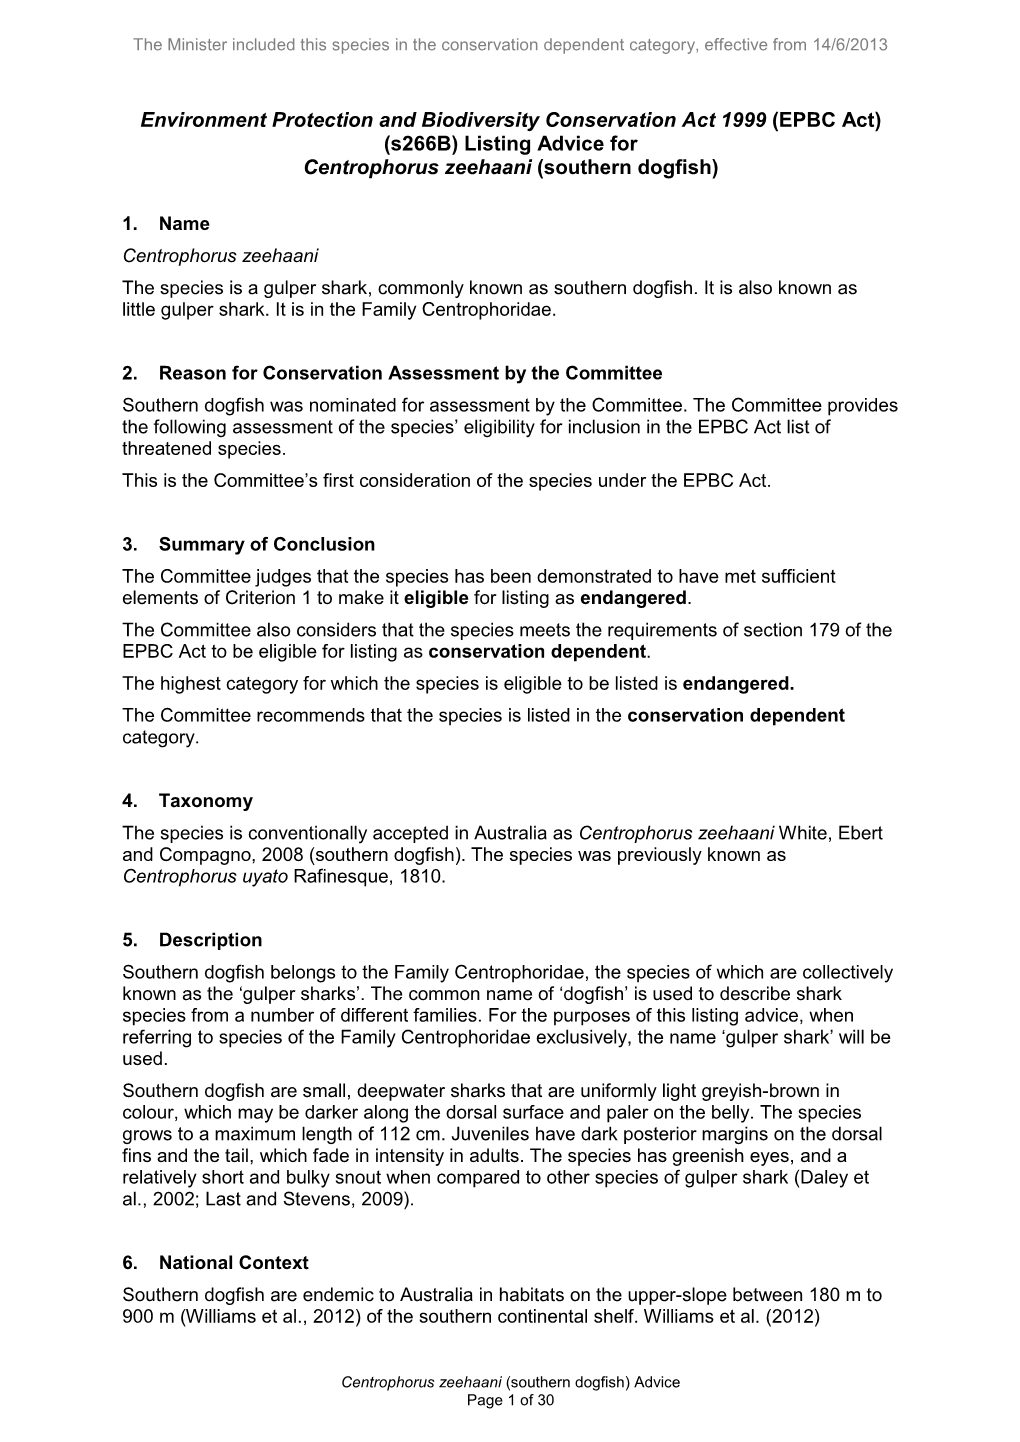 EPBC Act) (S266b) Listing Advice for Centrophorus Zeehaani (Southern Dogfish)